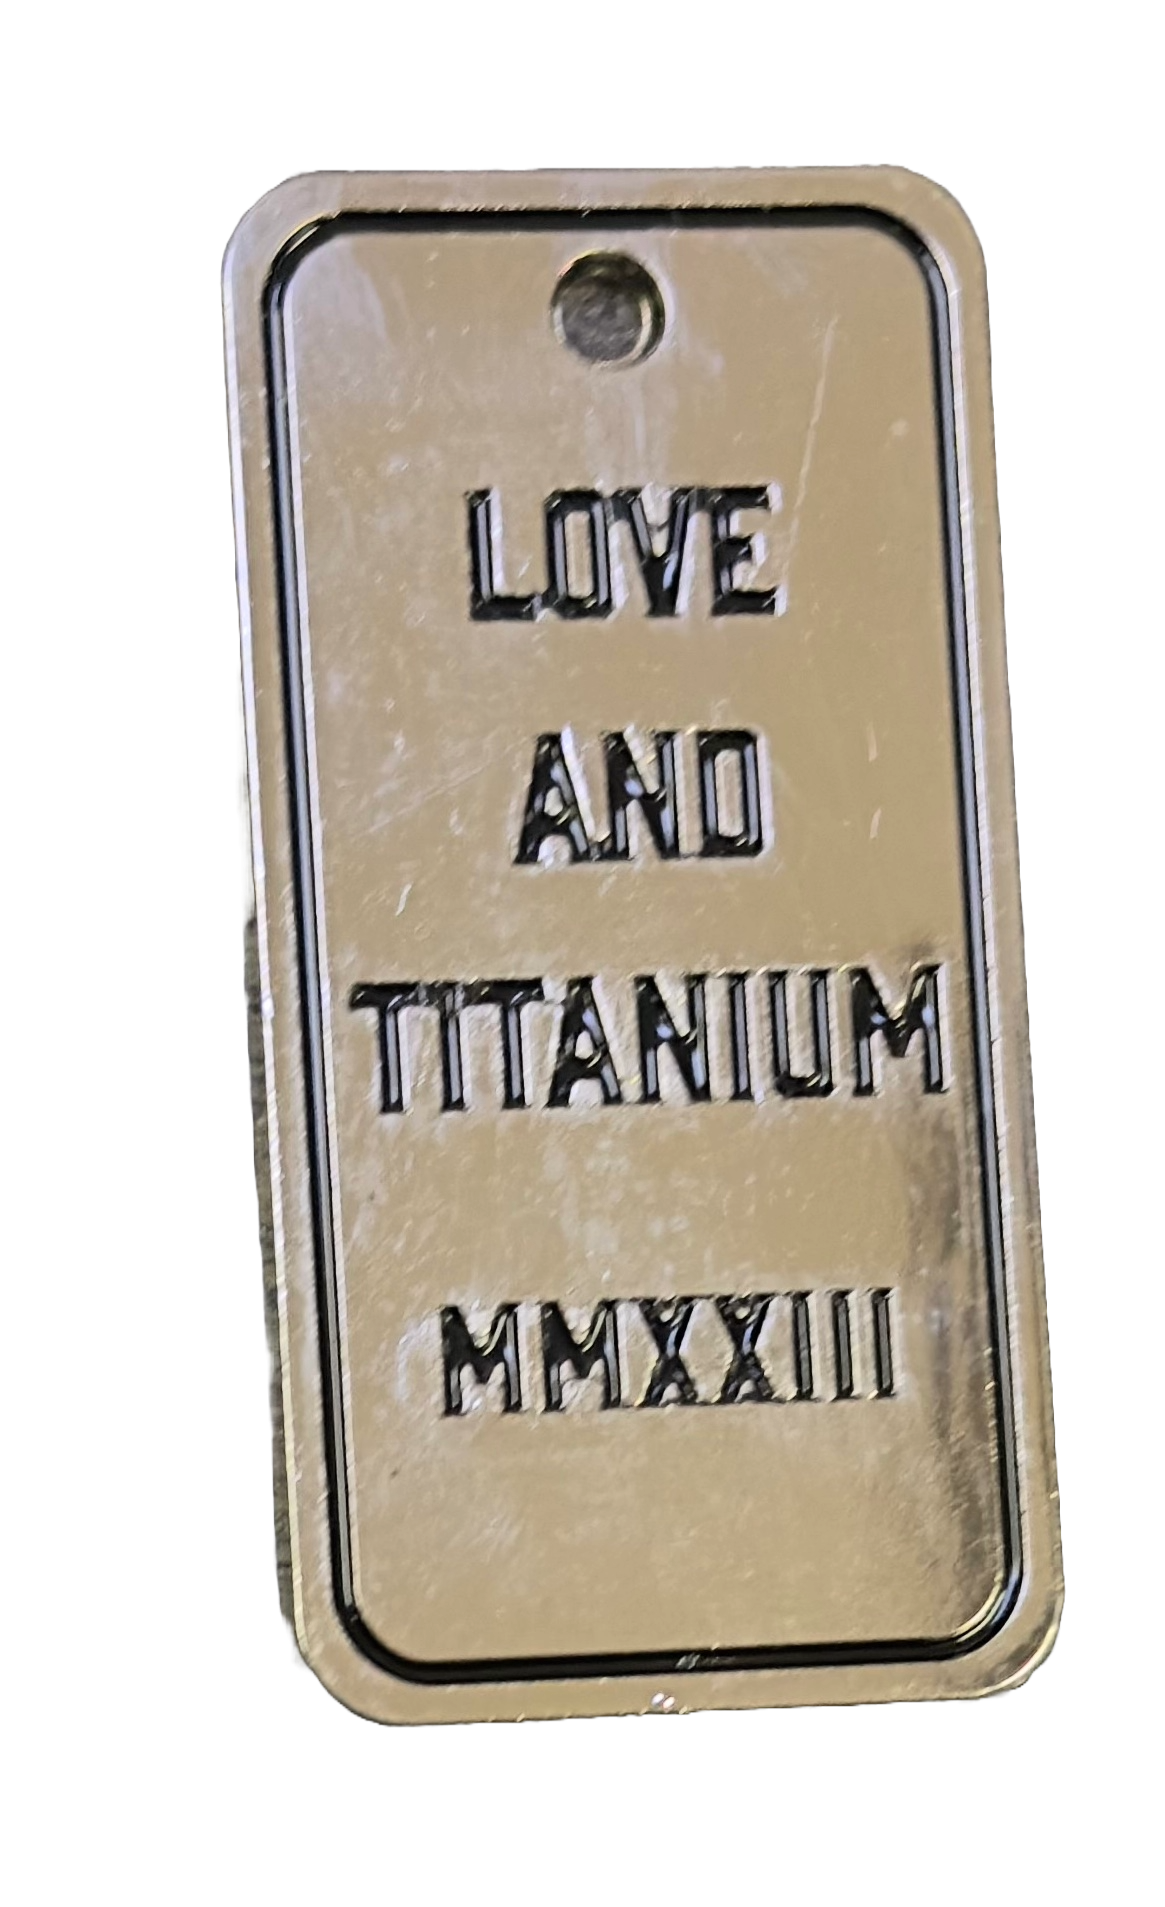 "Love and Titanium" Dog Tag